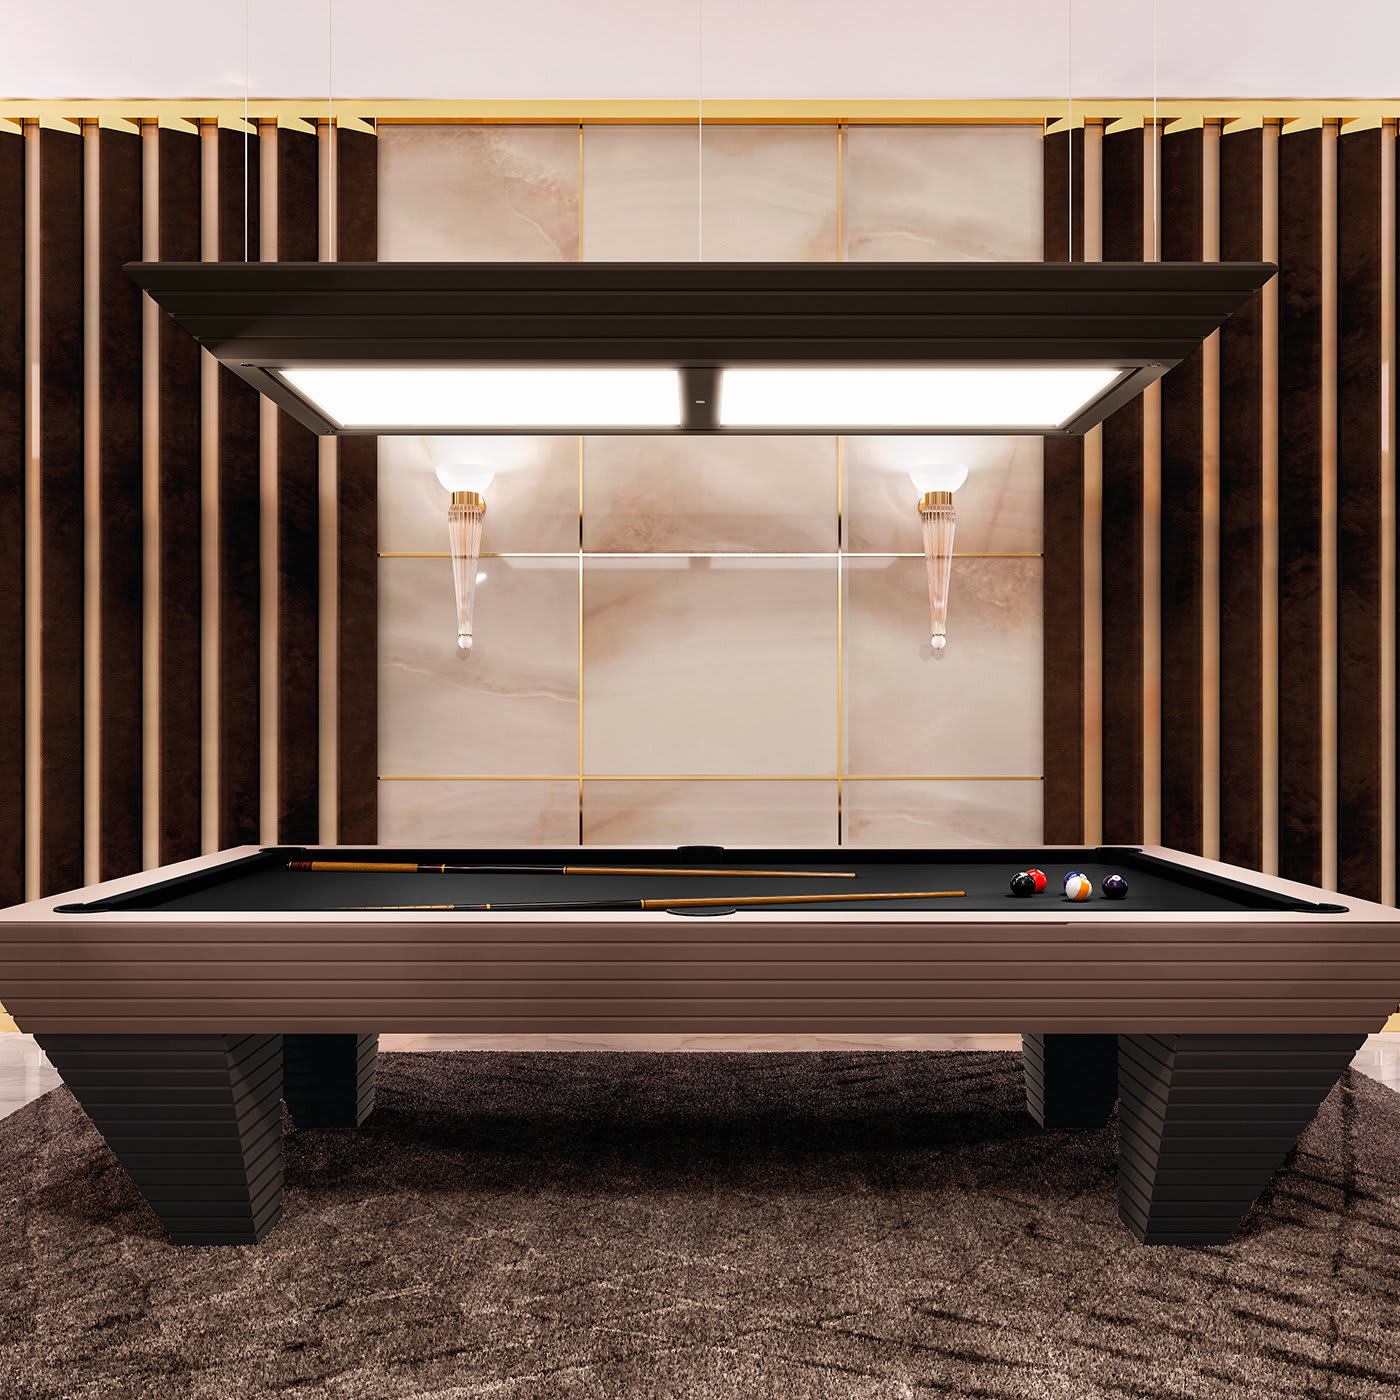 NewDe pool table by Pino Vismara - Vismara